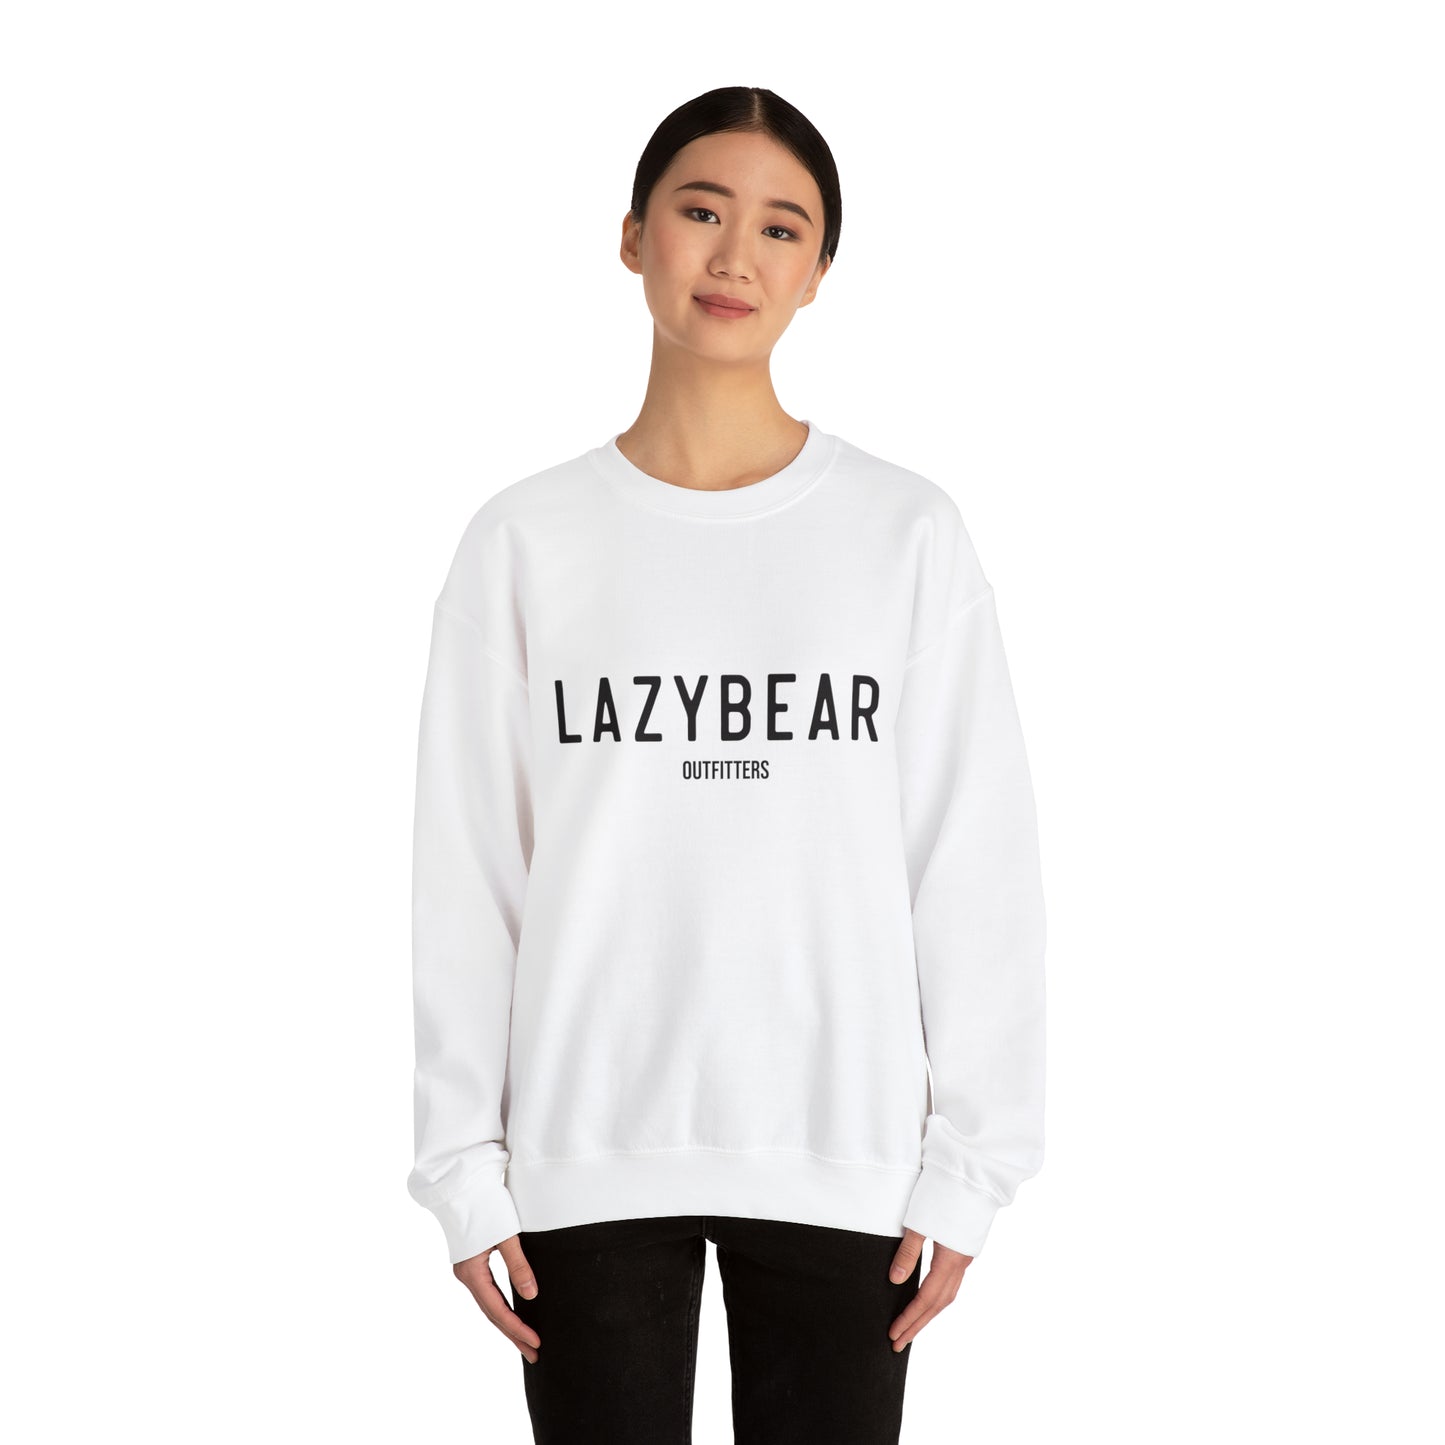 Lazy Bear Crewneck Sweatshirt (front name, back bear)